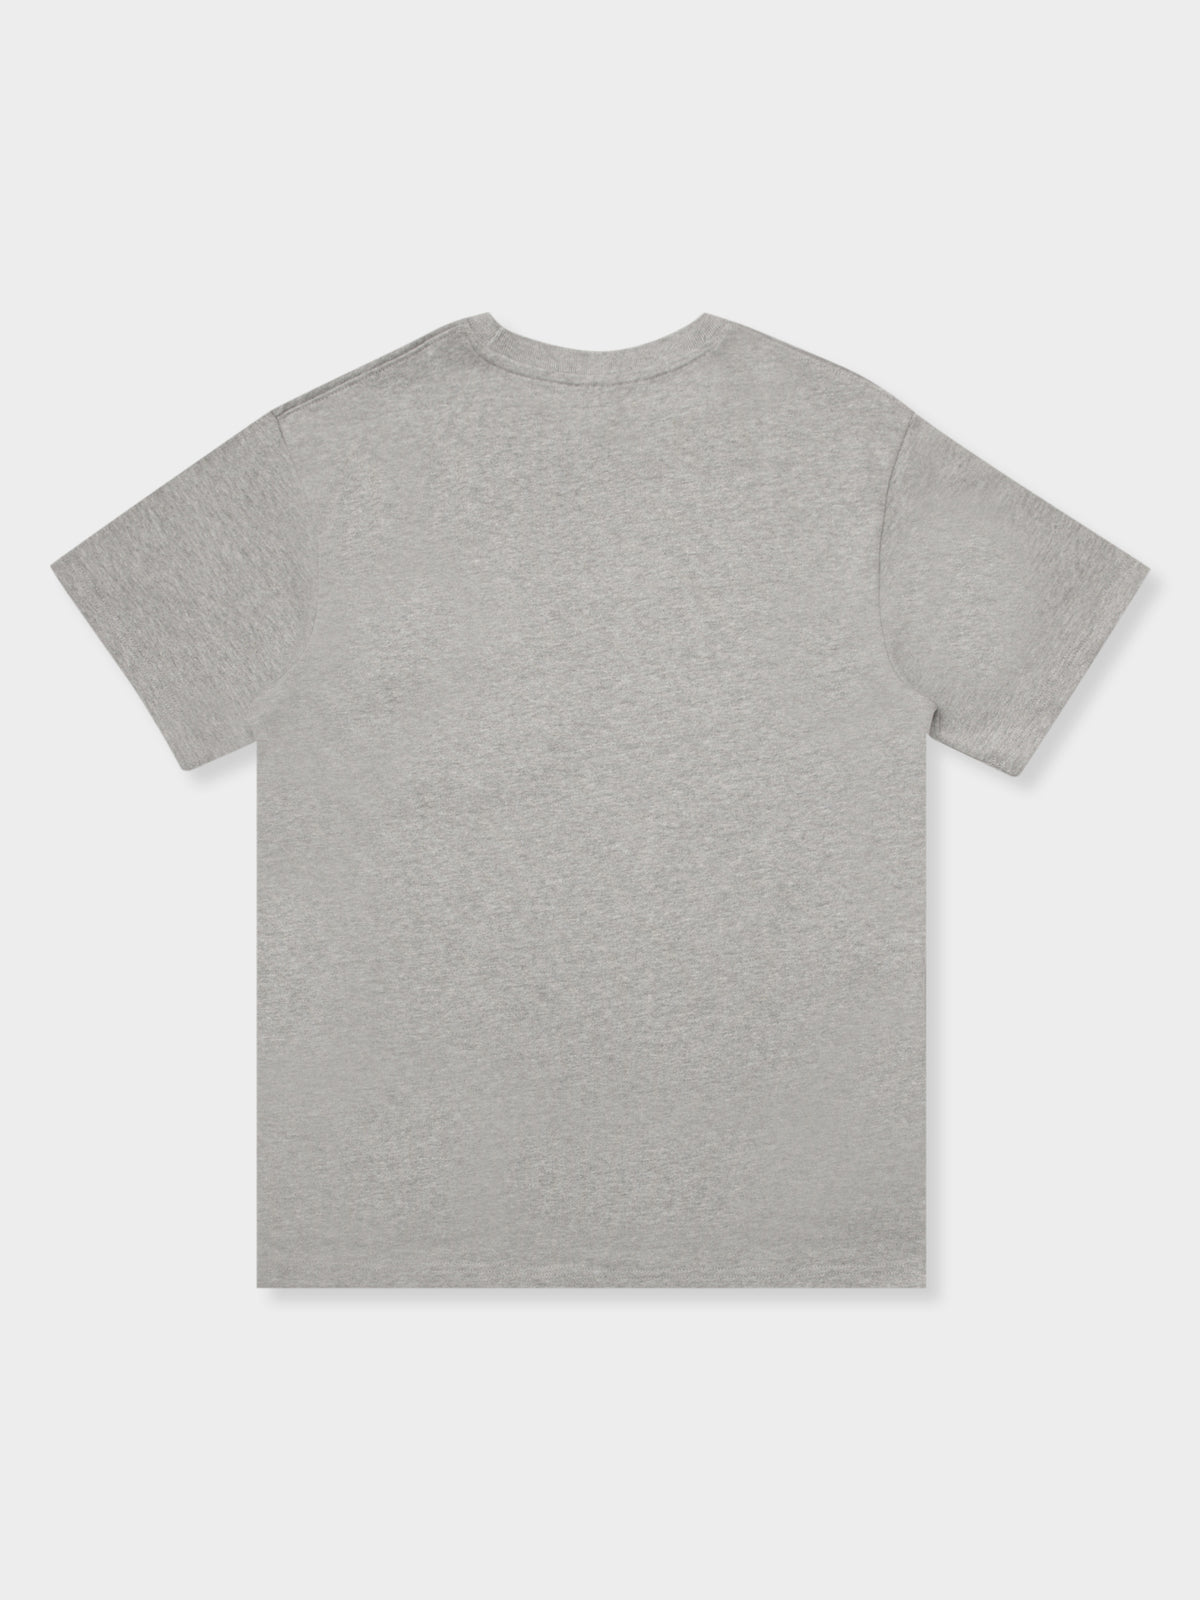 91 SS Pocket T-Shirt in Grey Marle